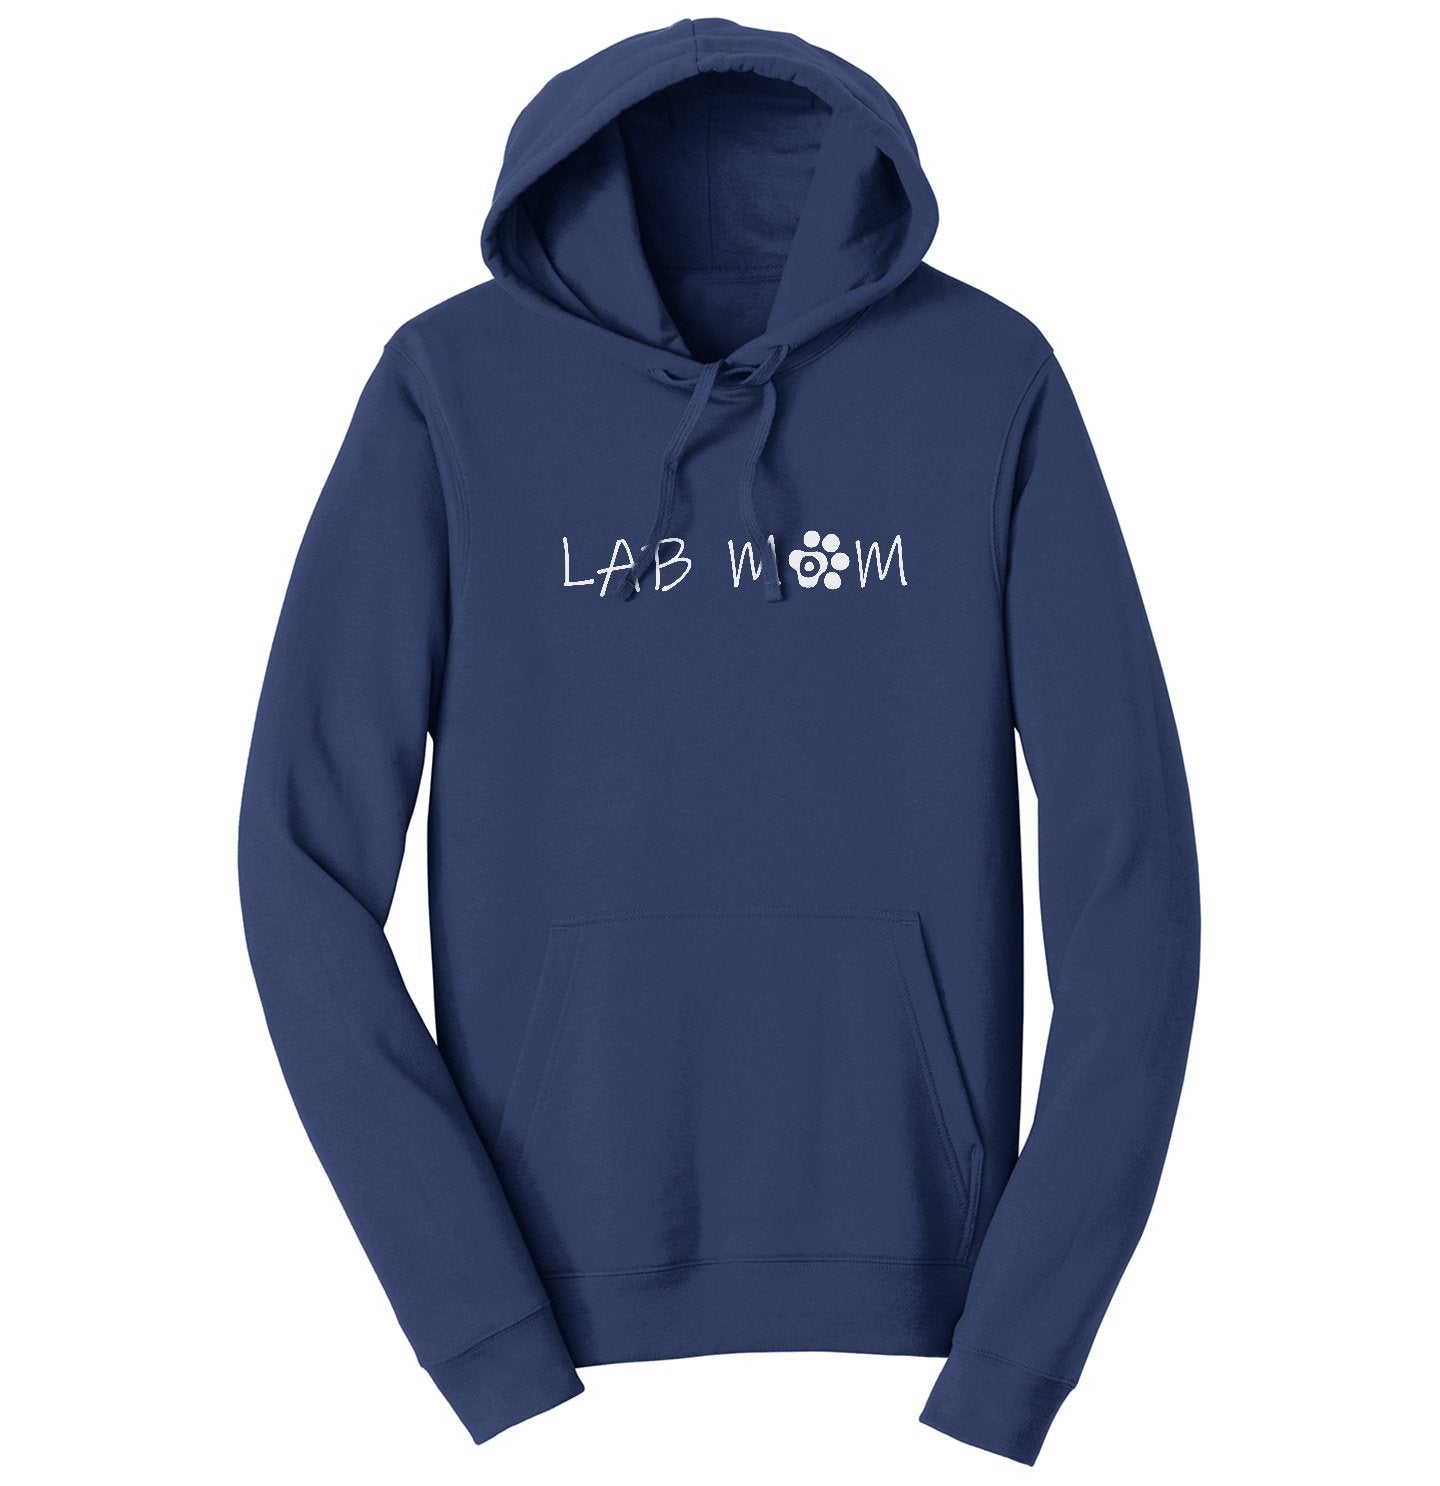 Lab Mom - Paw Text - Adult Unisex Hoodie Sweatshirt